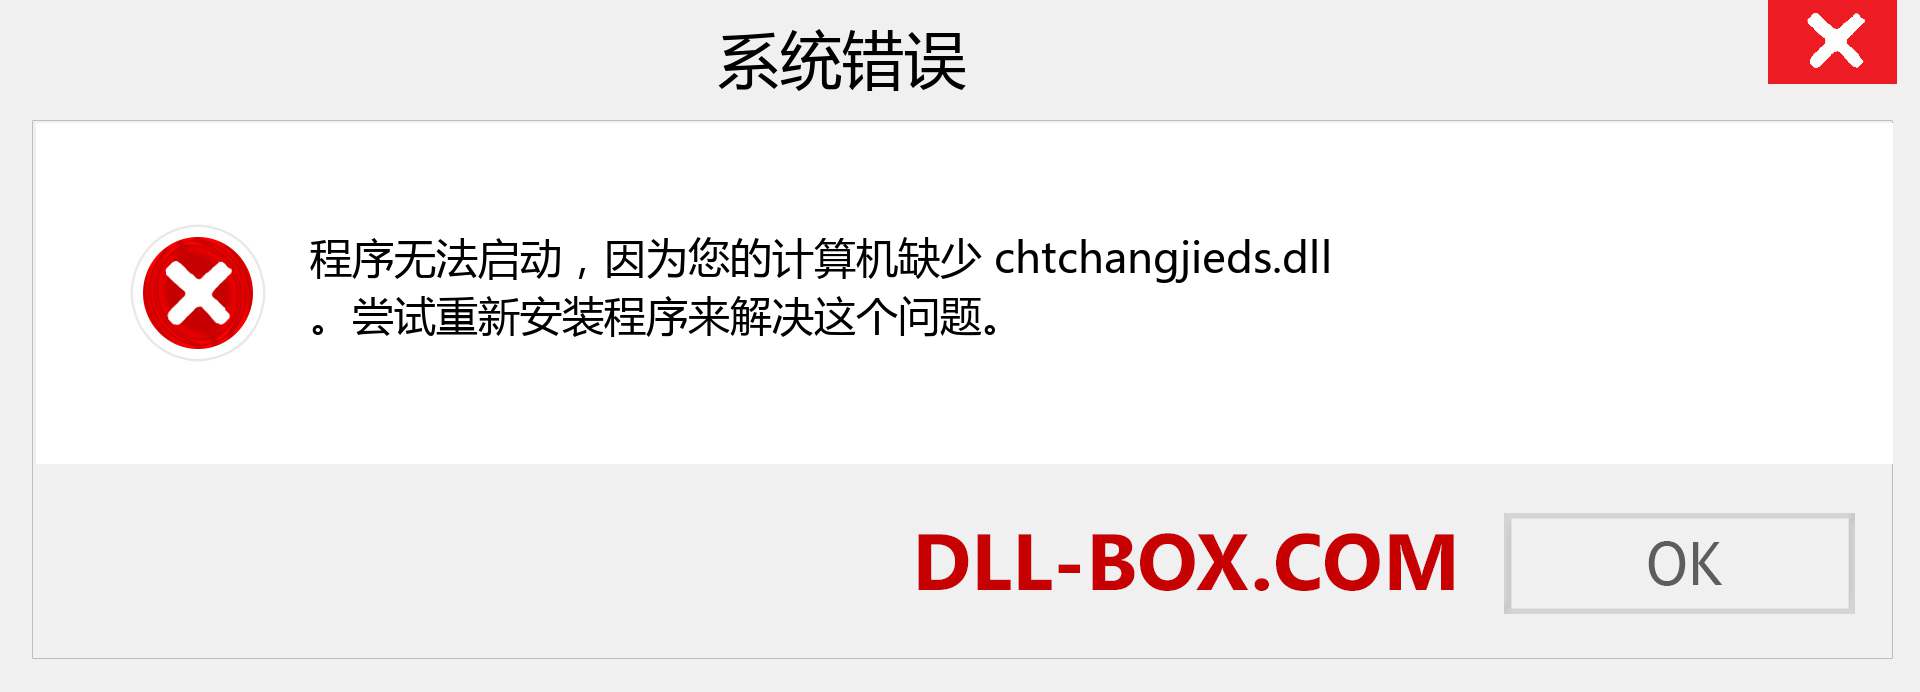 chtchangjieds.dll 文件丢失？。 适用于 Windows 7、8、10 的下载 - 修复 Windows、照片、图像上的 chtchangjieds dll 丢失错误